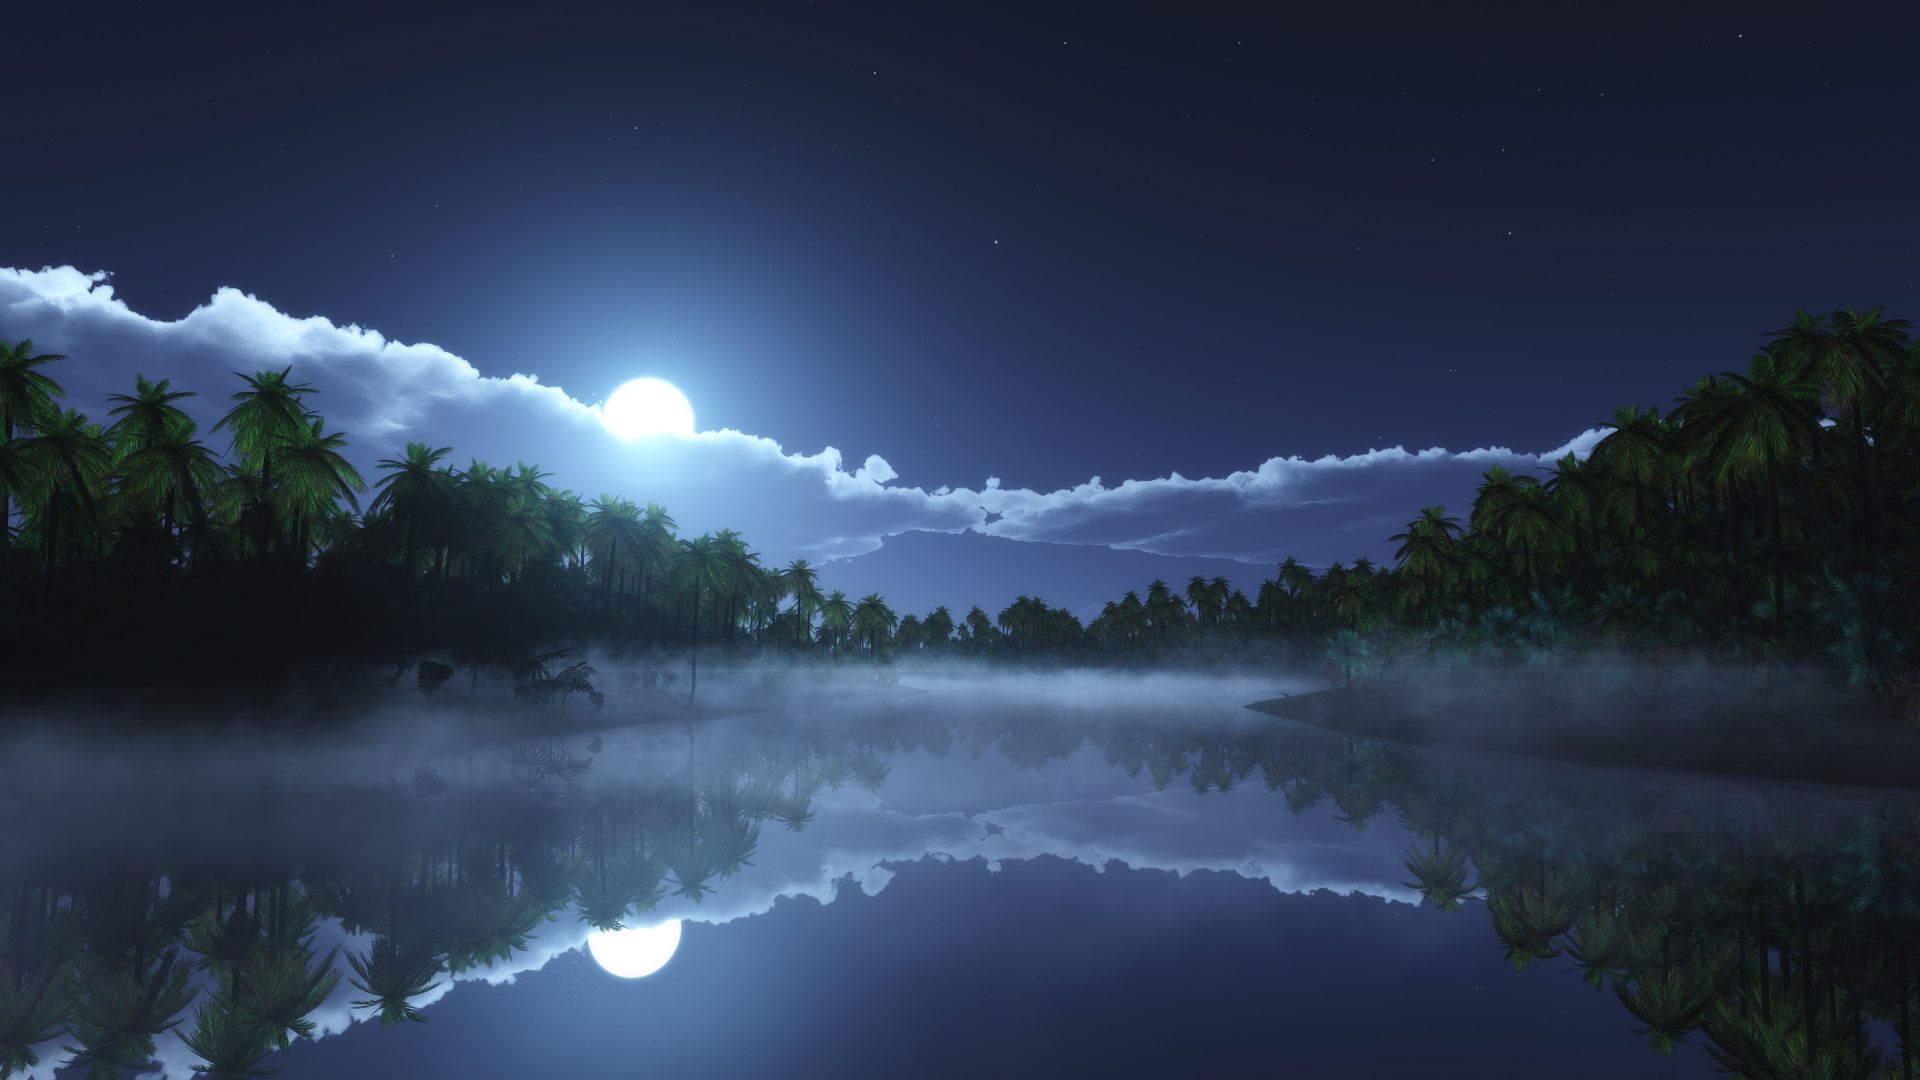 River, 4k, HD wallpaper, sea, palms, night, moon, clouds (horizontal)